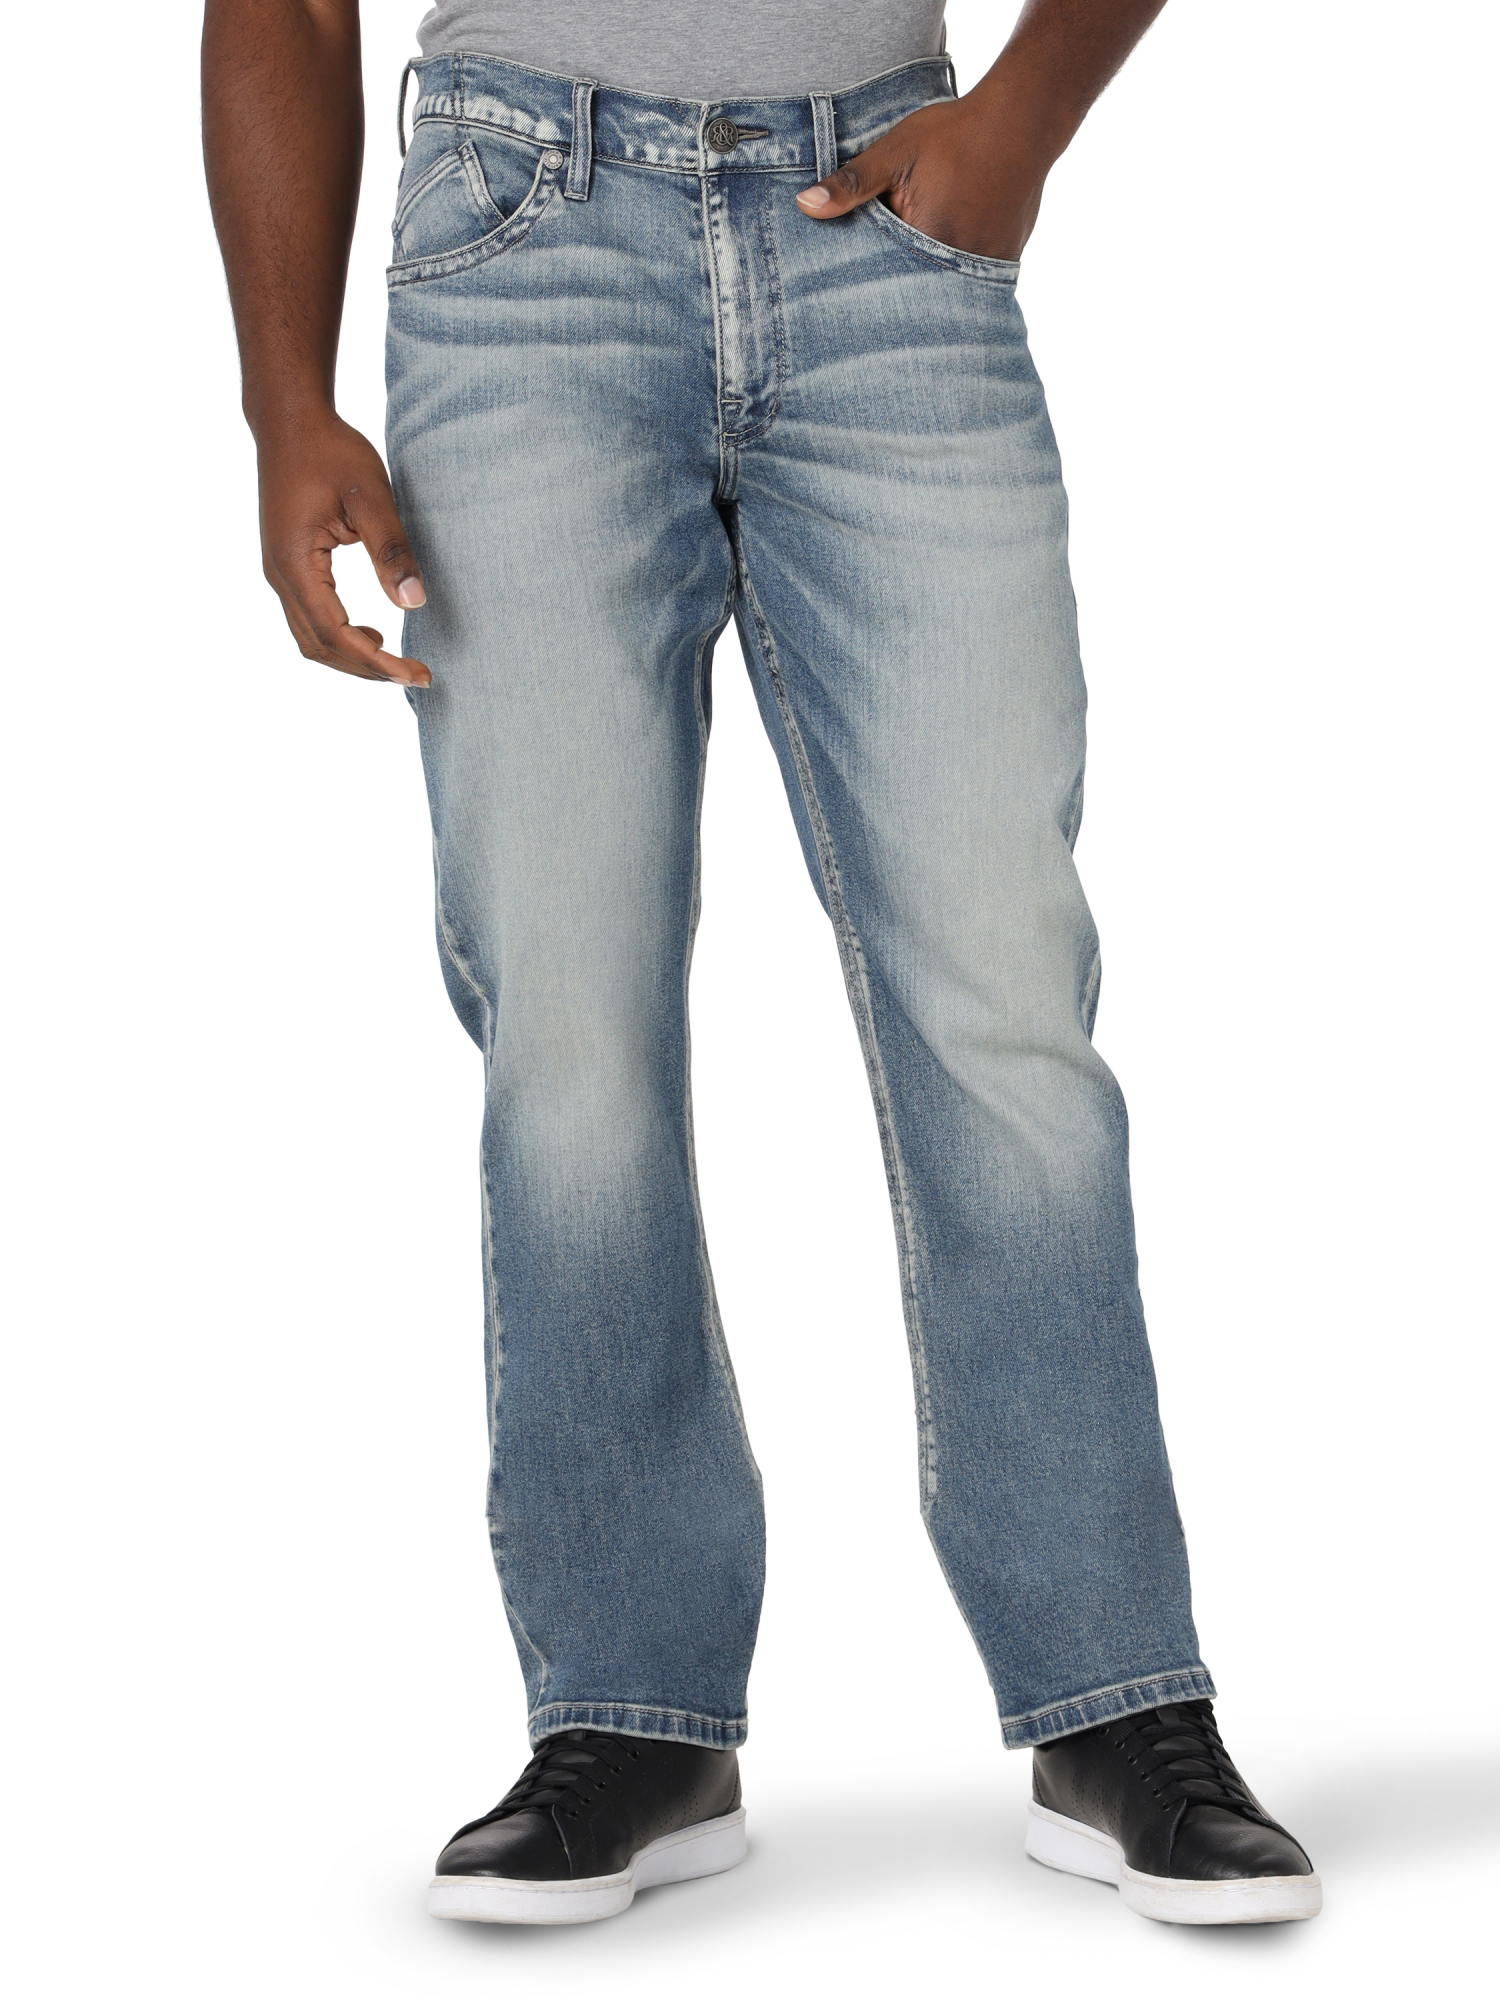 Rock & Republic Men's Straight Leg Jean with Ultra Comfort Denim - image 1 of 5